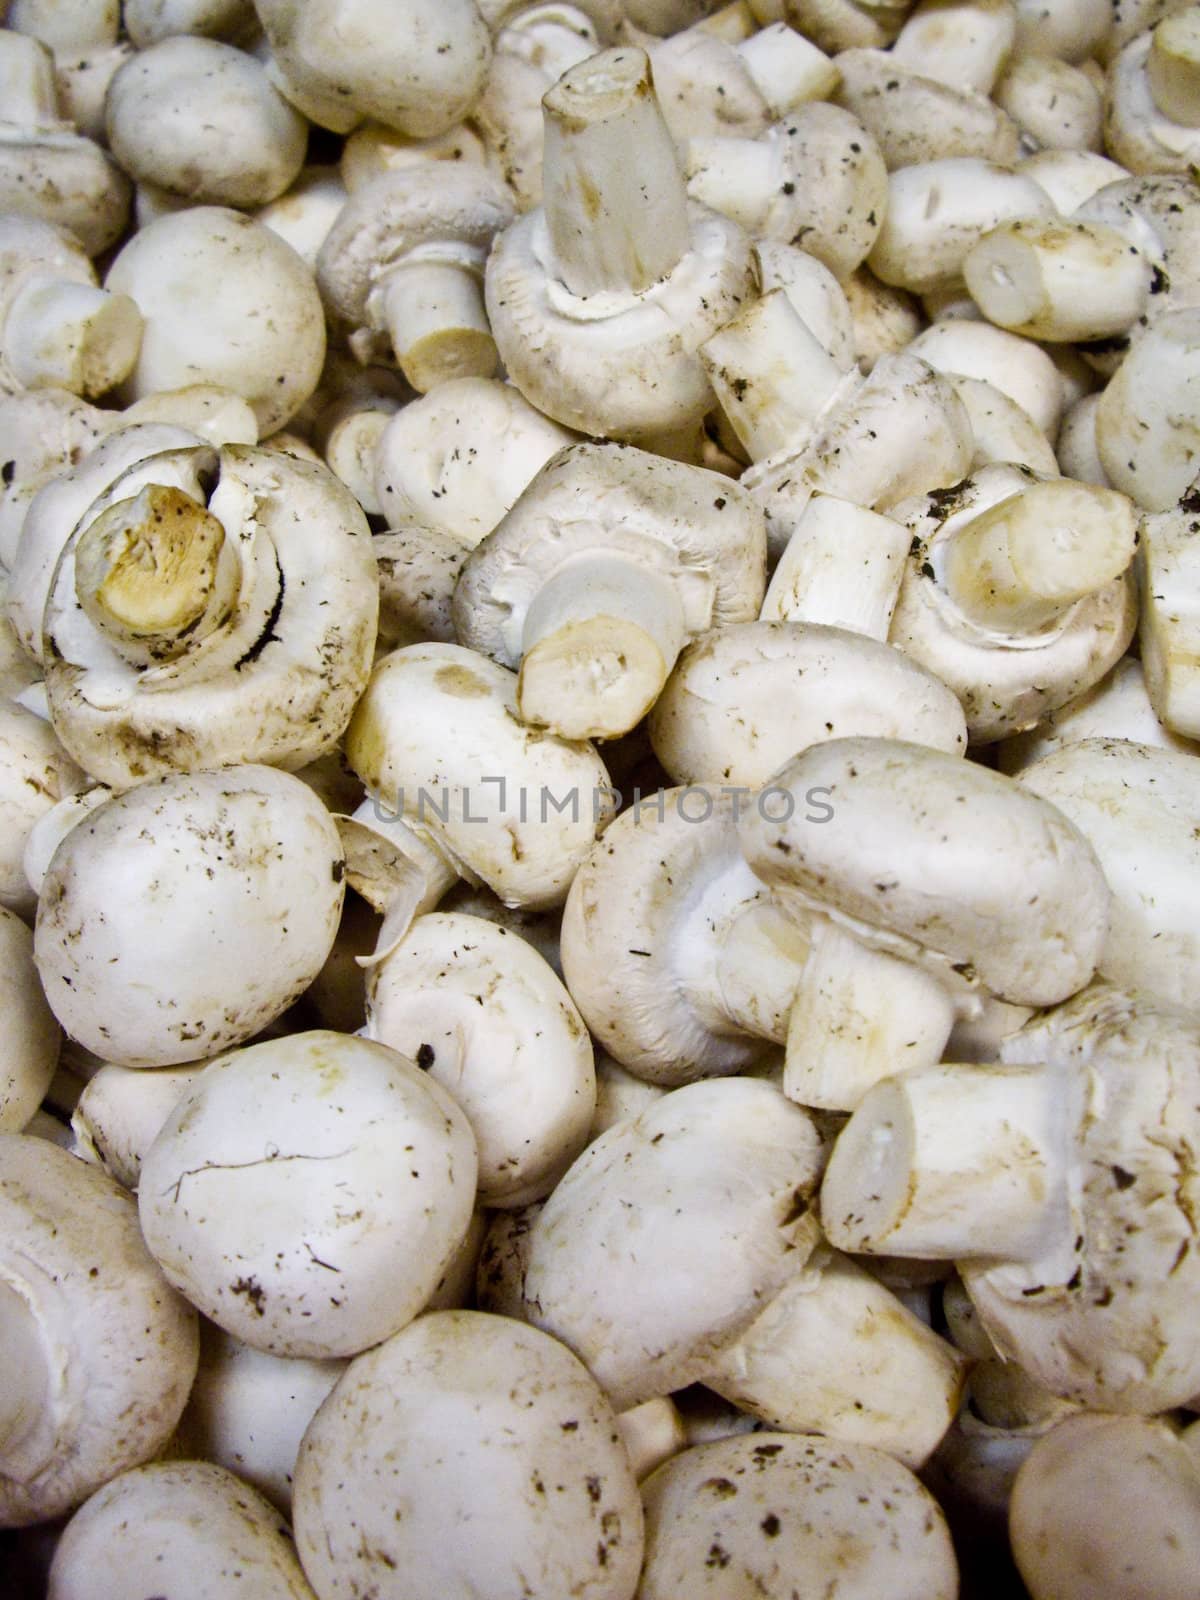 White Button Mushrooms by emattil